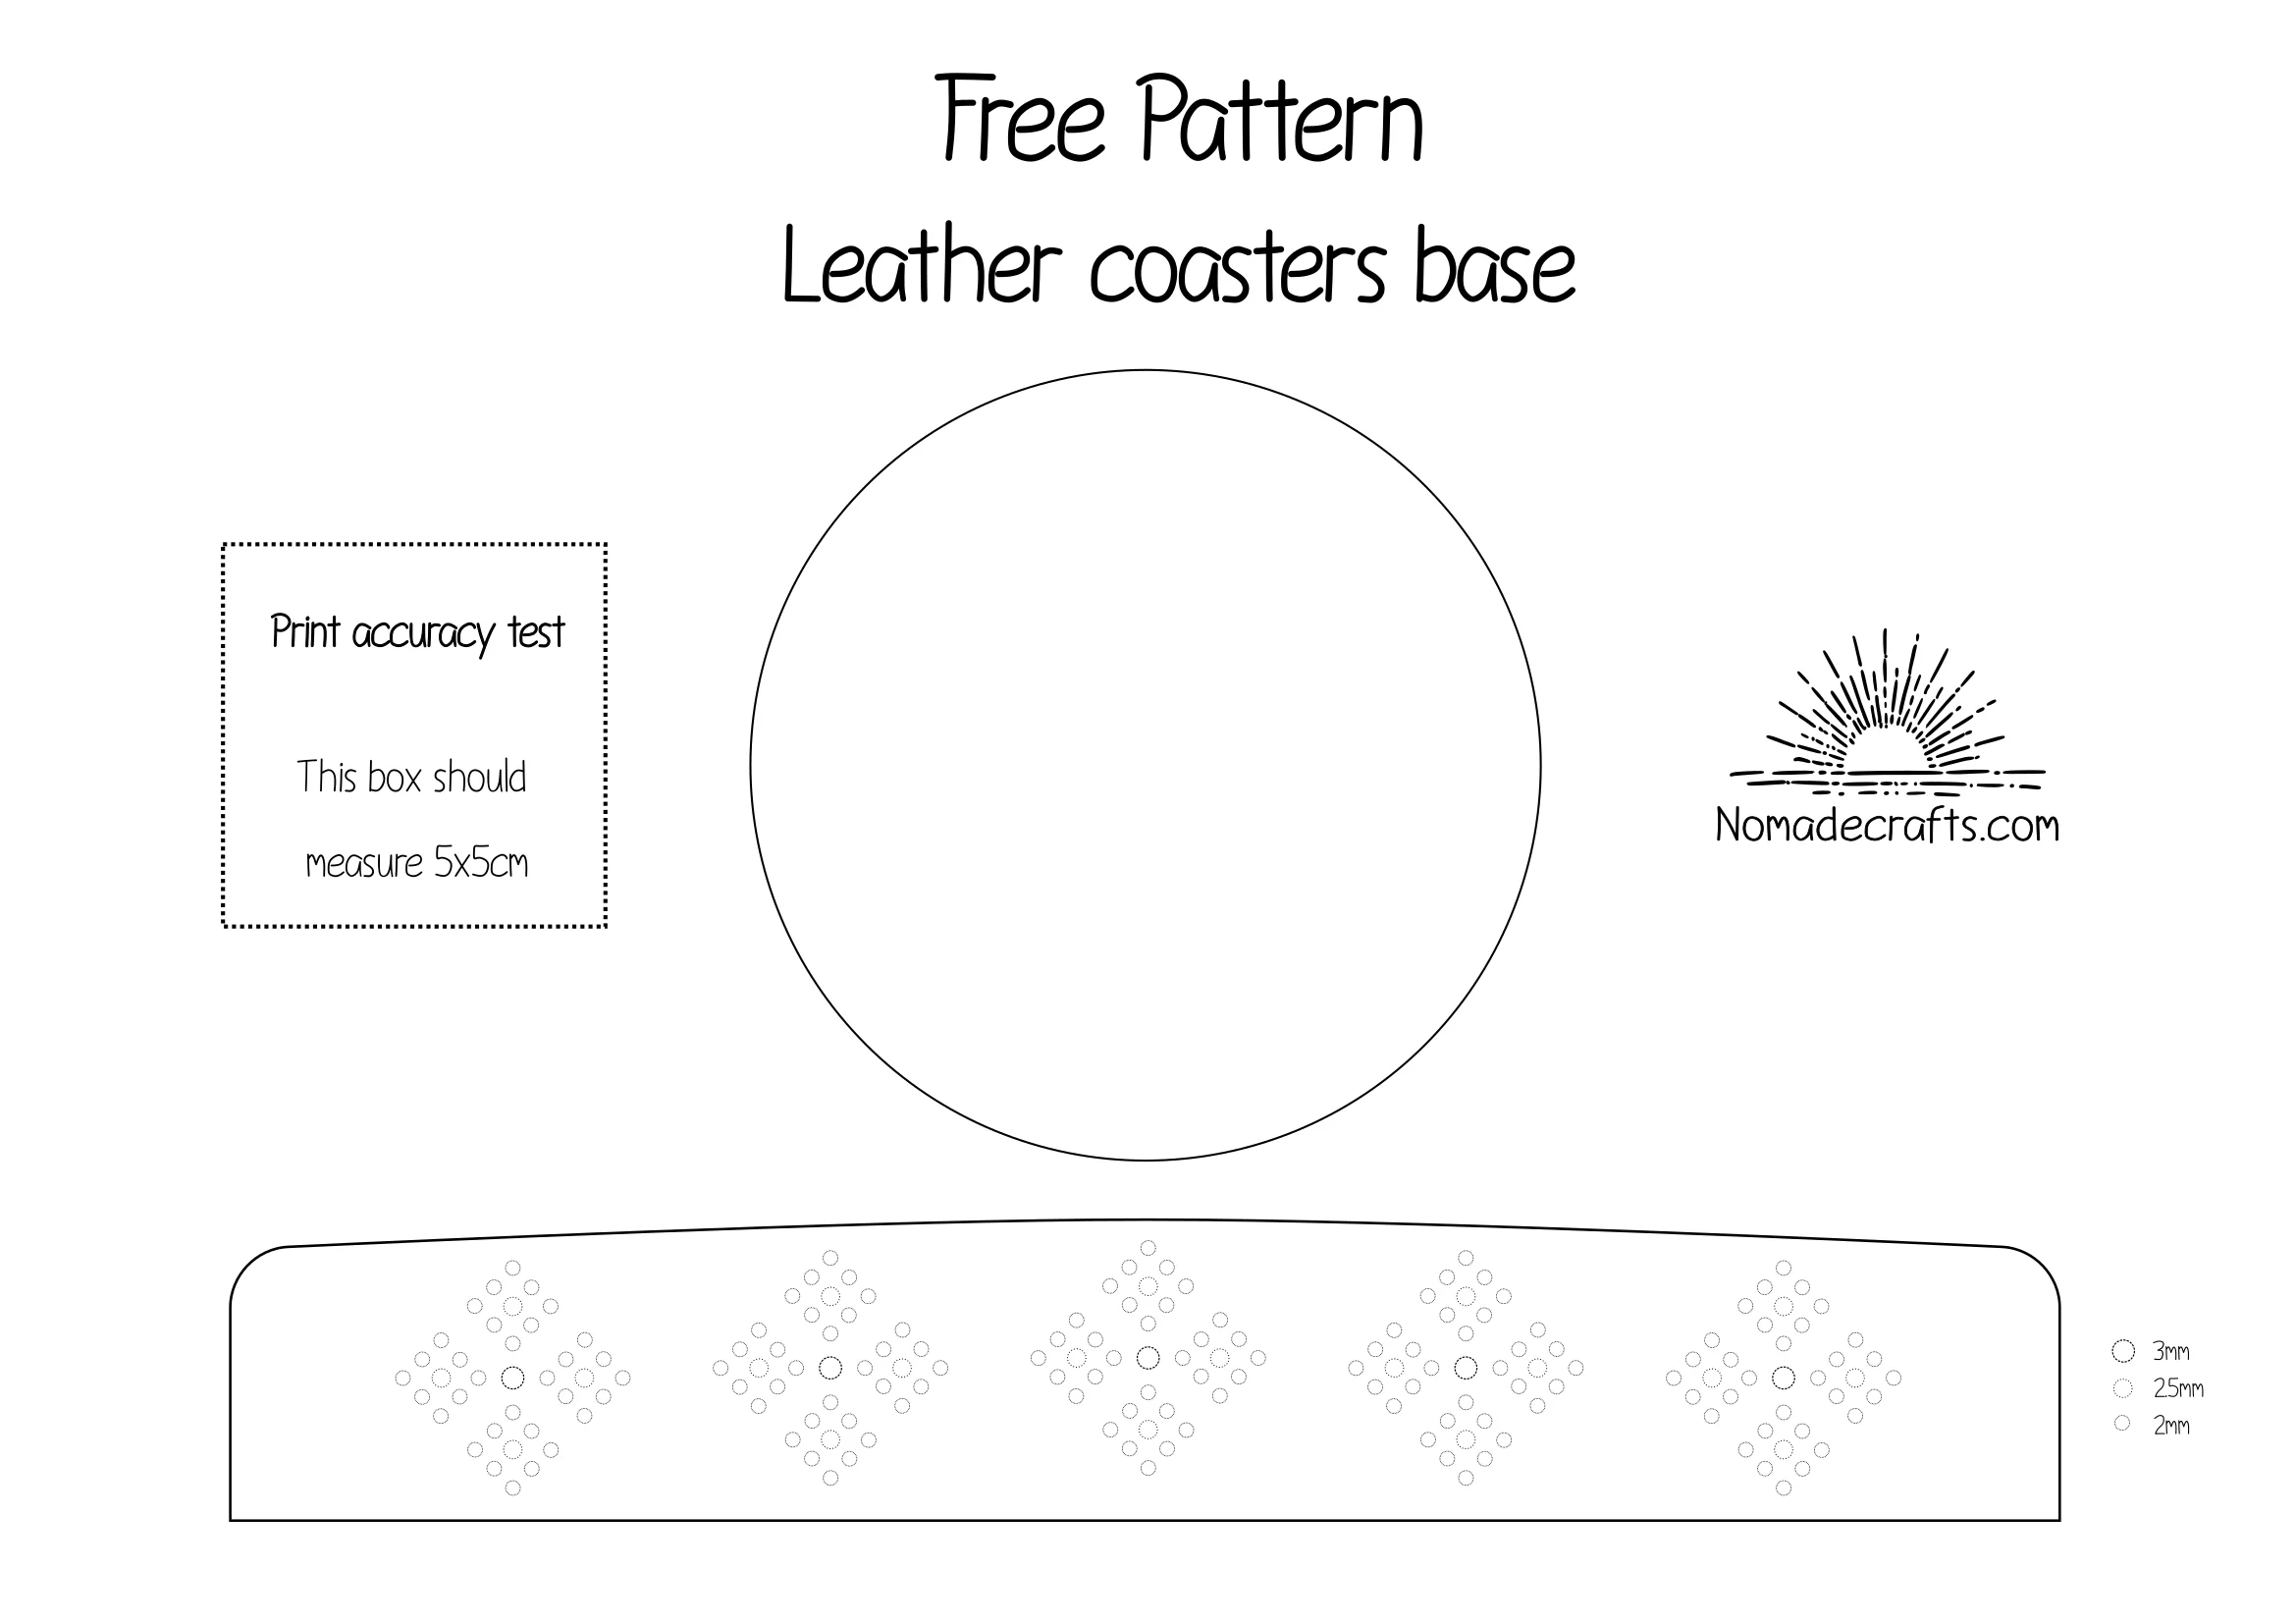 Leather coaster set base  Nomade Crafts&Dreams - Free Leather-craft  Patterns